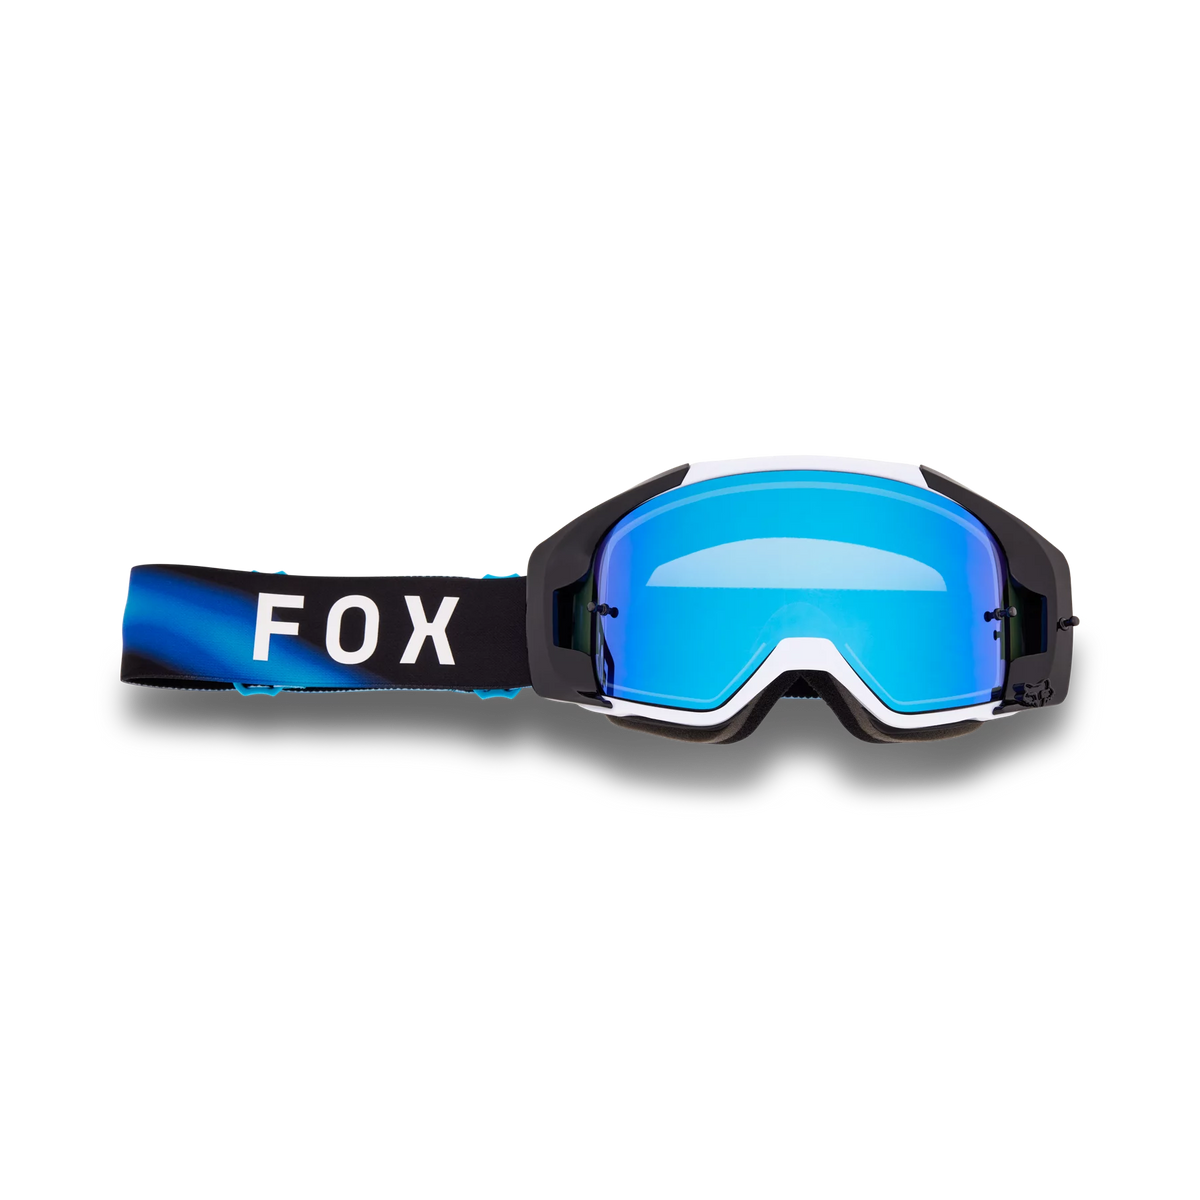 Fox Vue Volatile Mirrored Lens Goggles